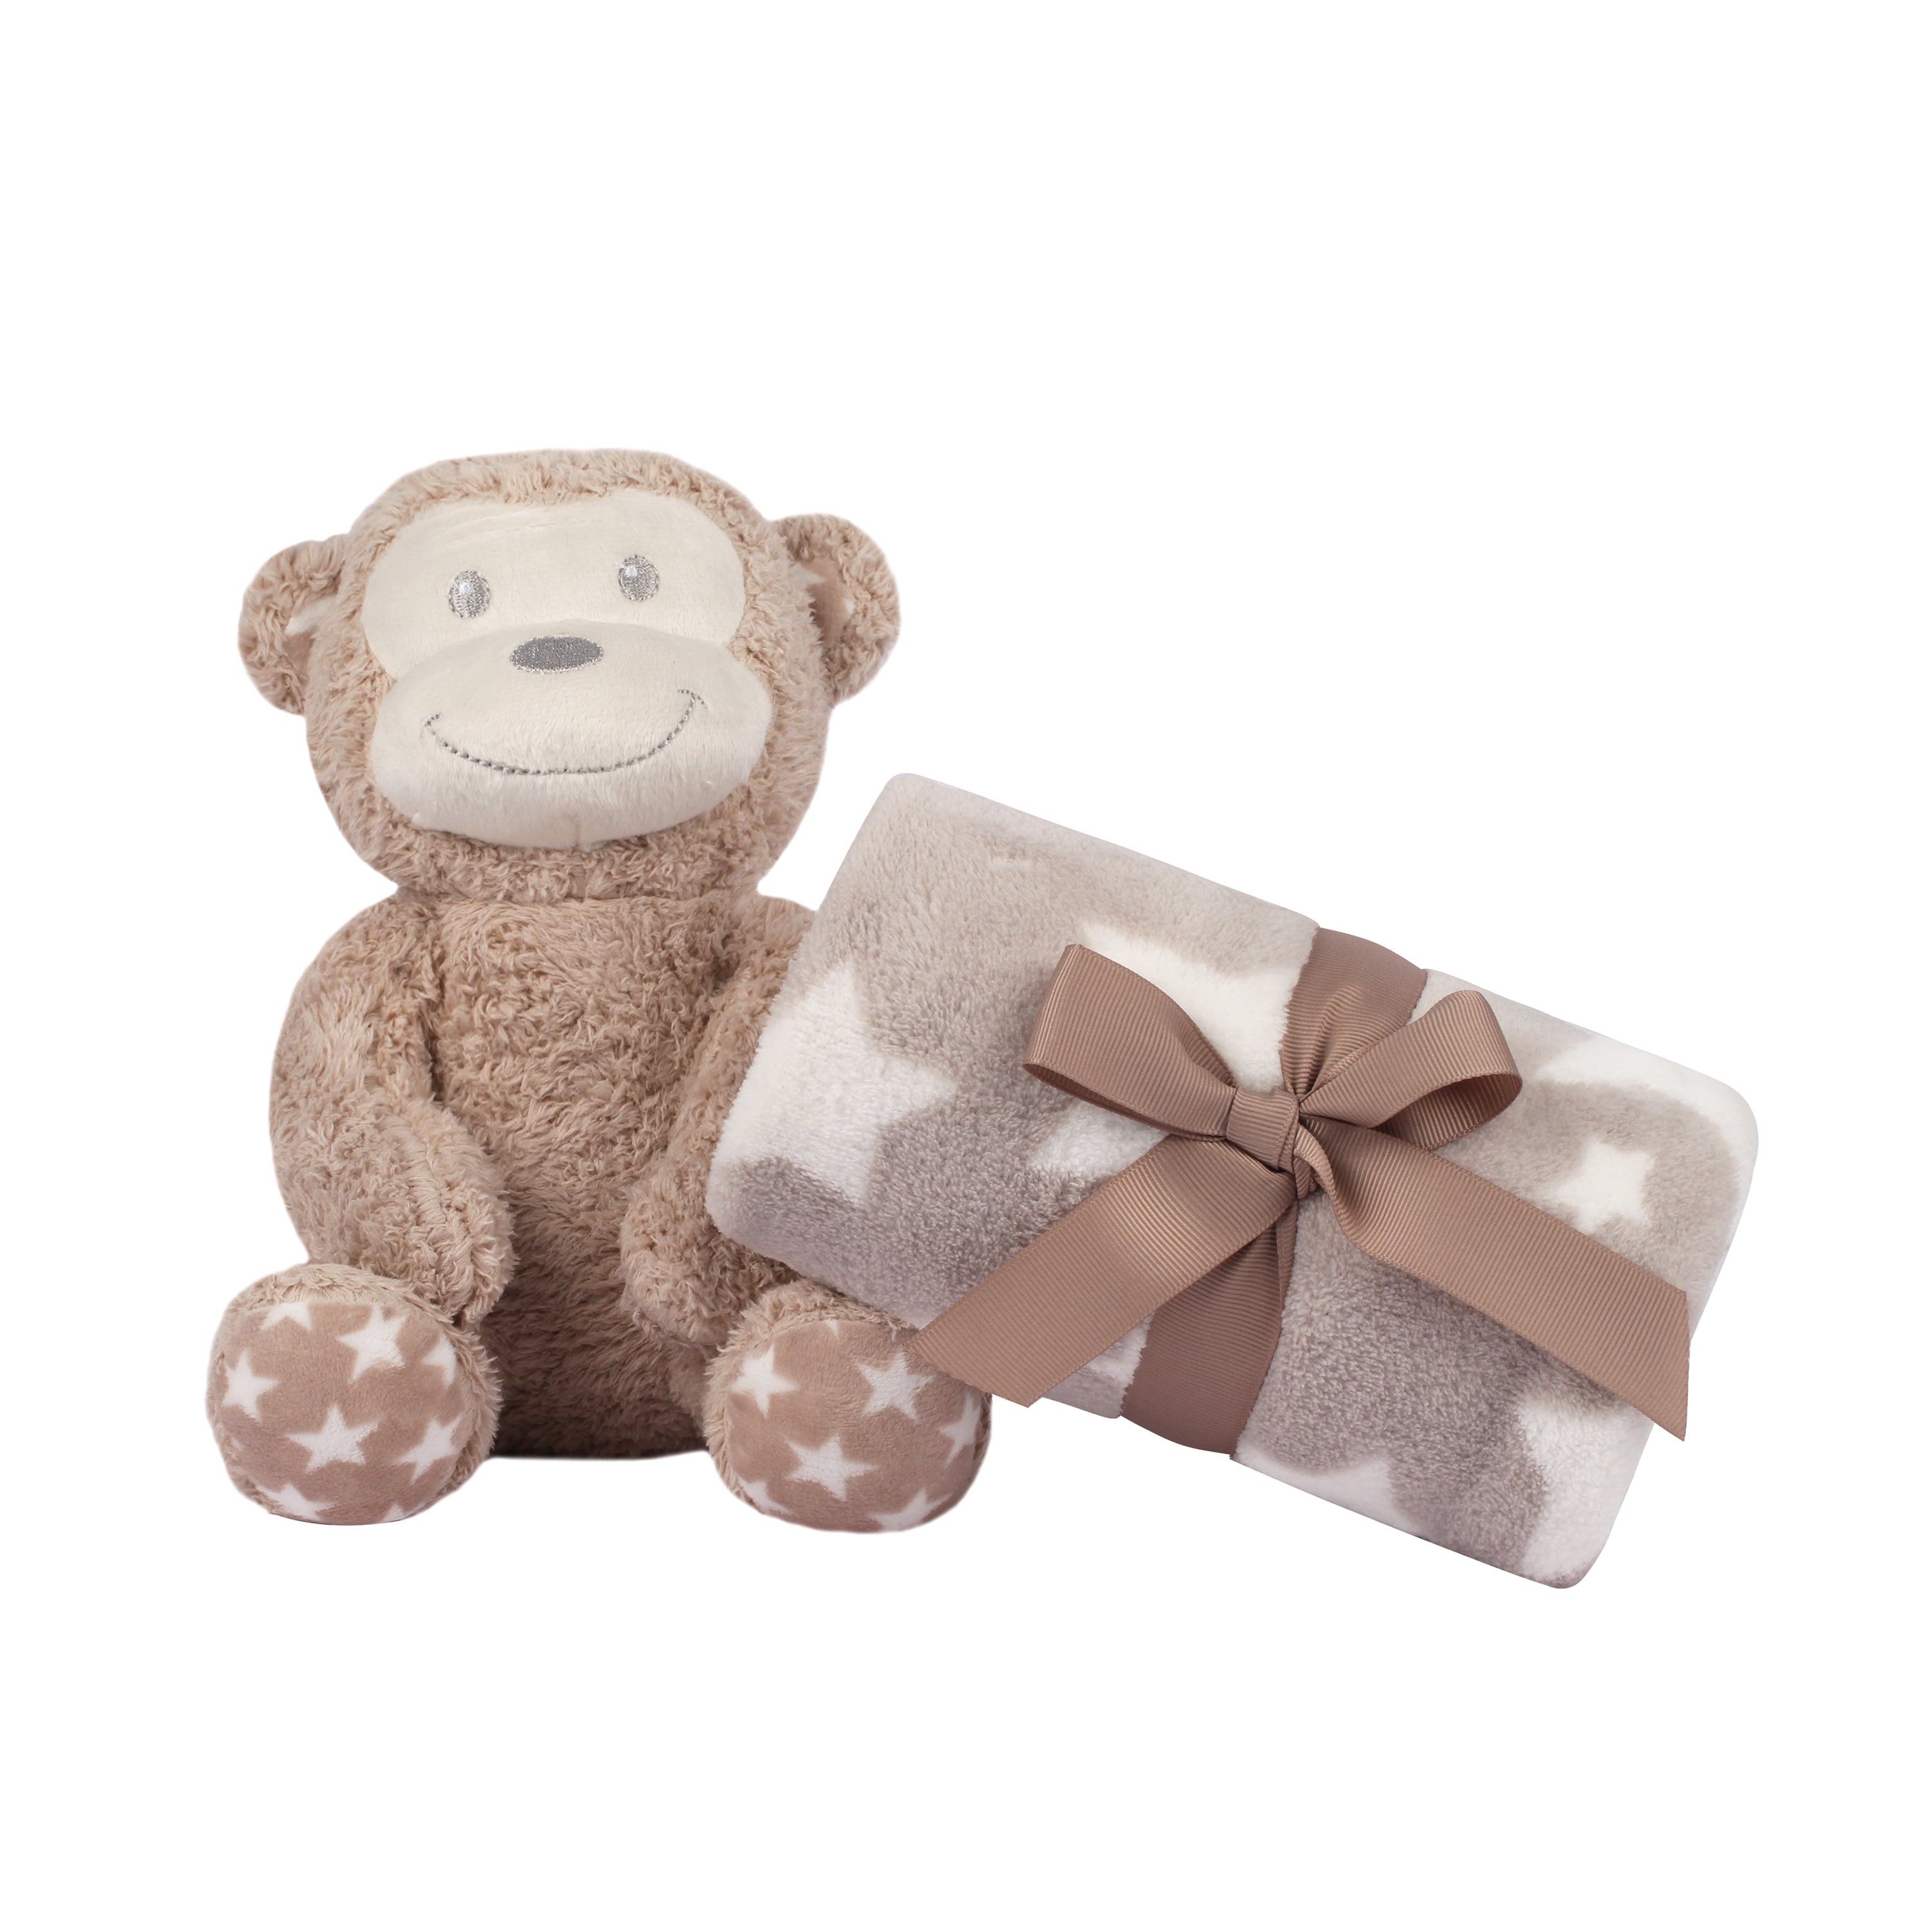 Abracadabra Toy With Blanket - Monkey